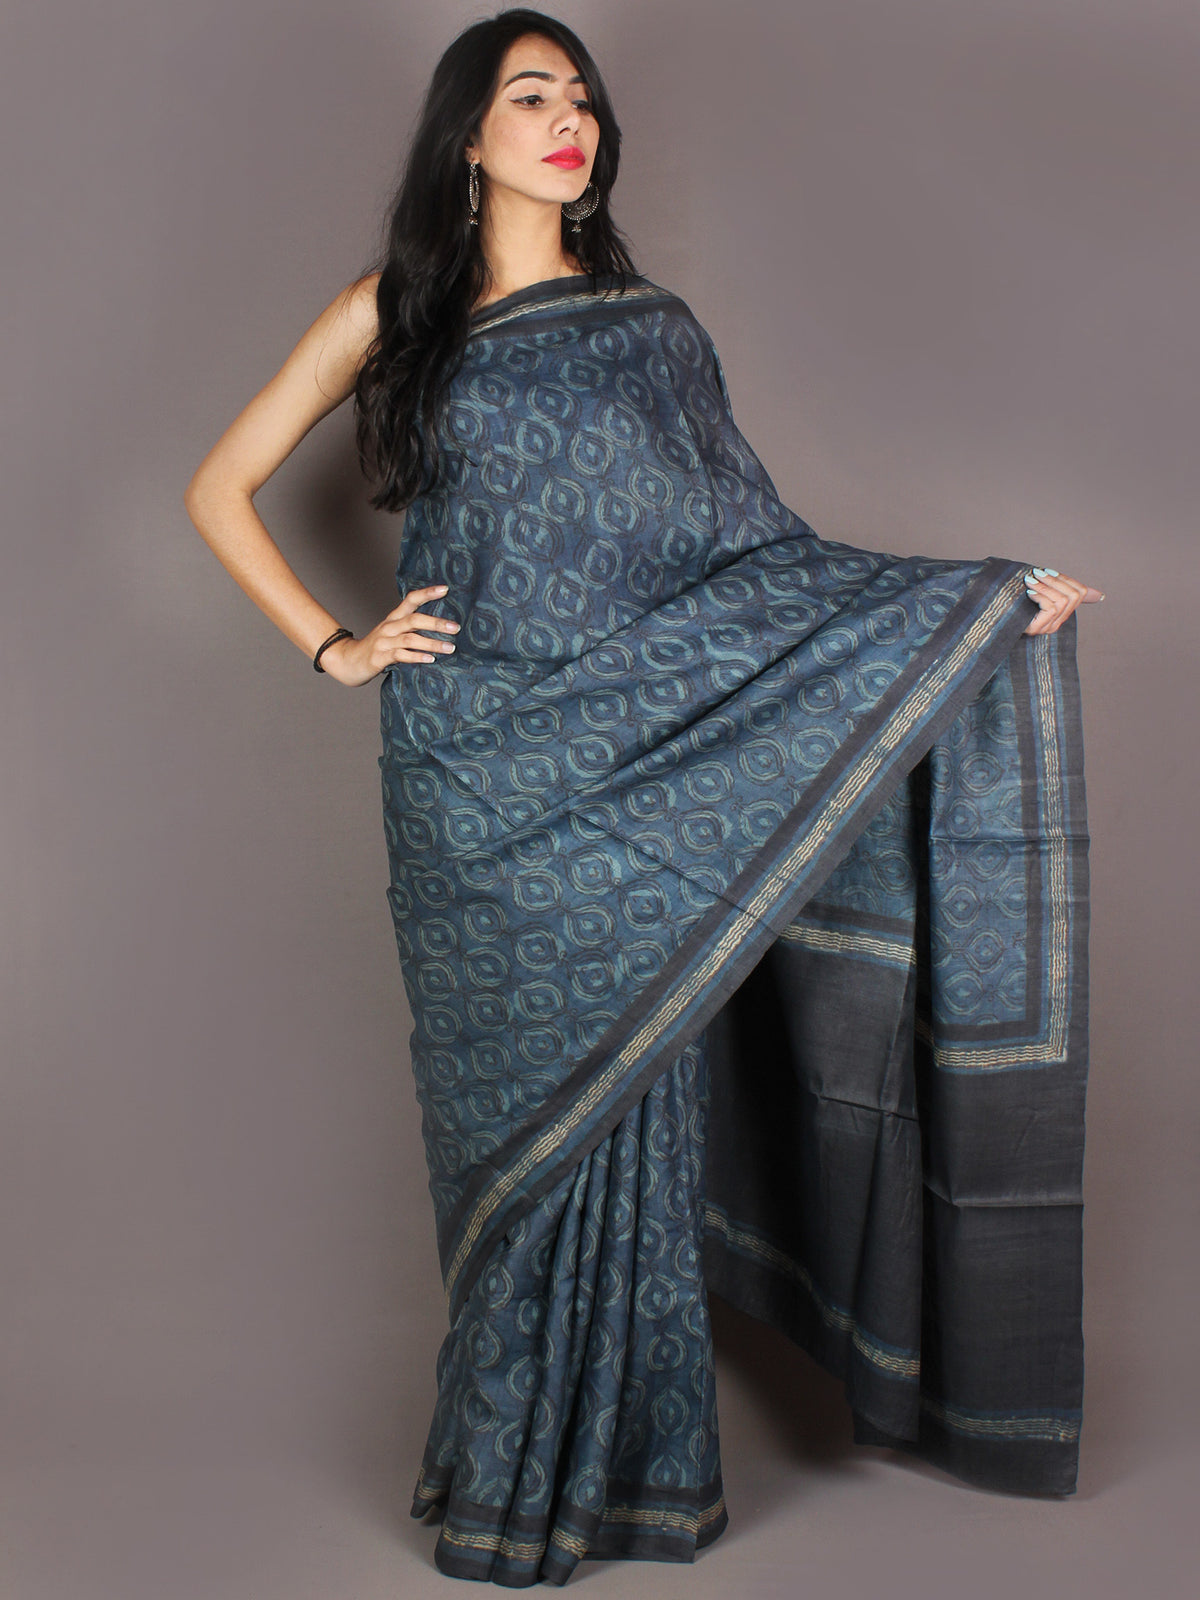 Tussar Handloom Silk Hand Block Printed Saree in Indigo Black & Beige- S03170955